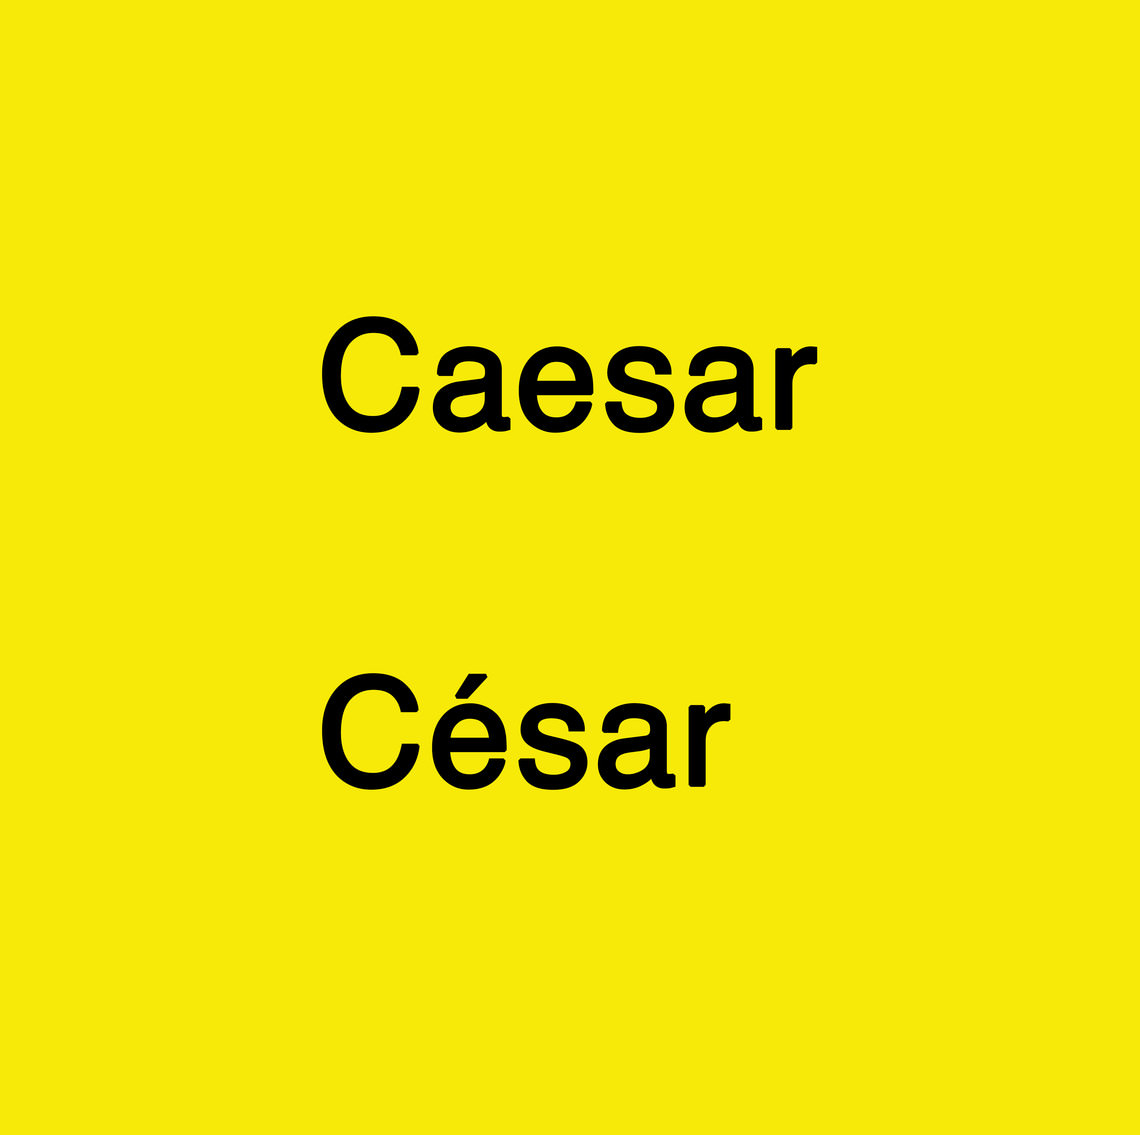  - Caesar César